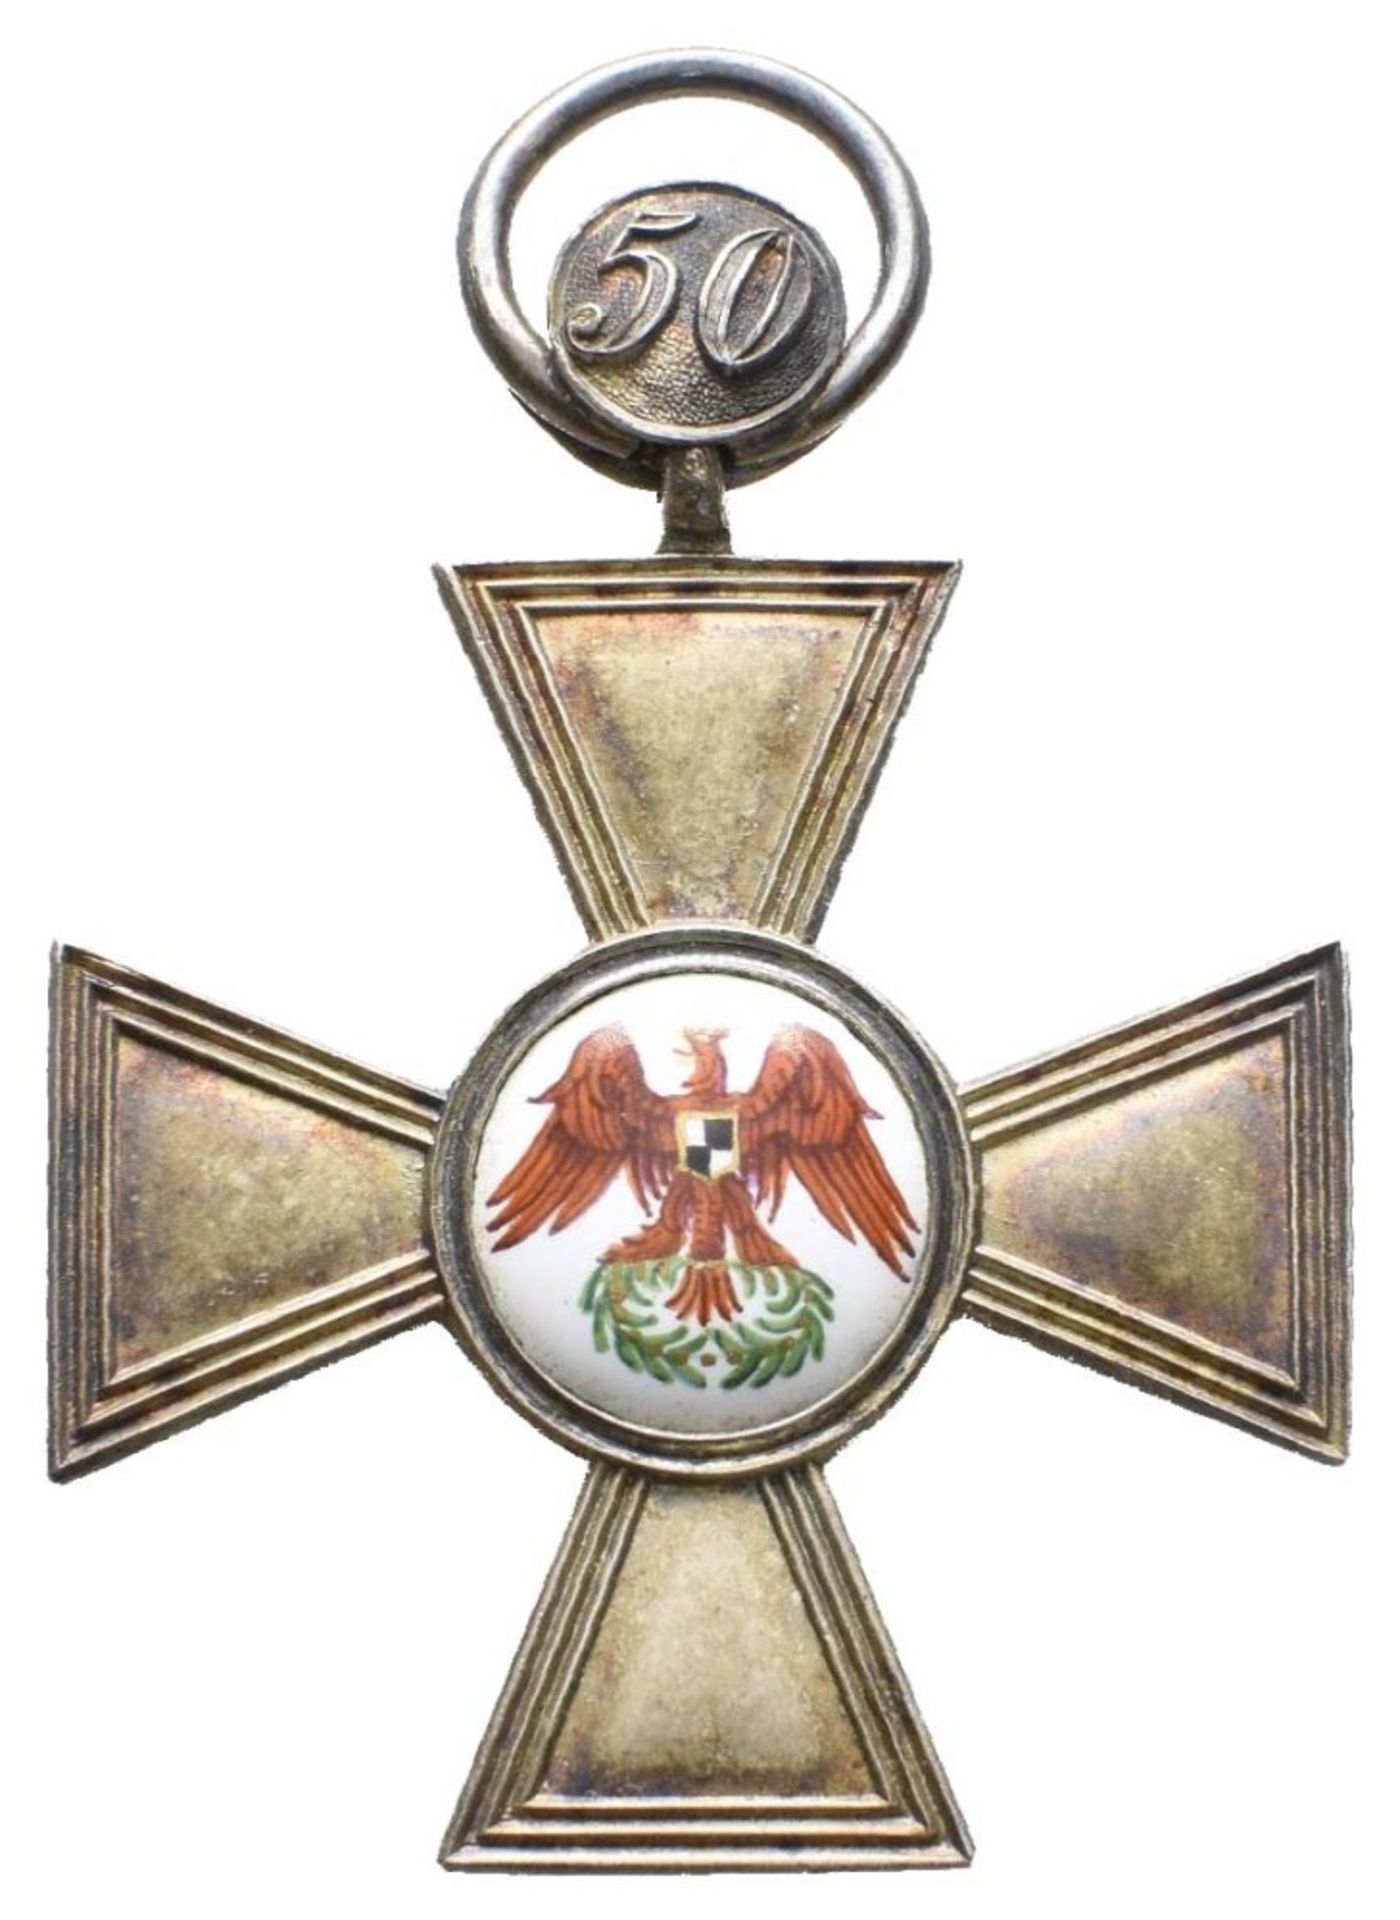 Preußen, Roter Adler Orden, Kreuz 4. Klasse, Silber, glatte Arme, mit Jubiläumszahl 50, OEK 1702,